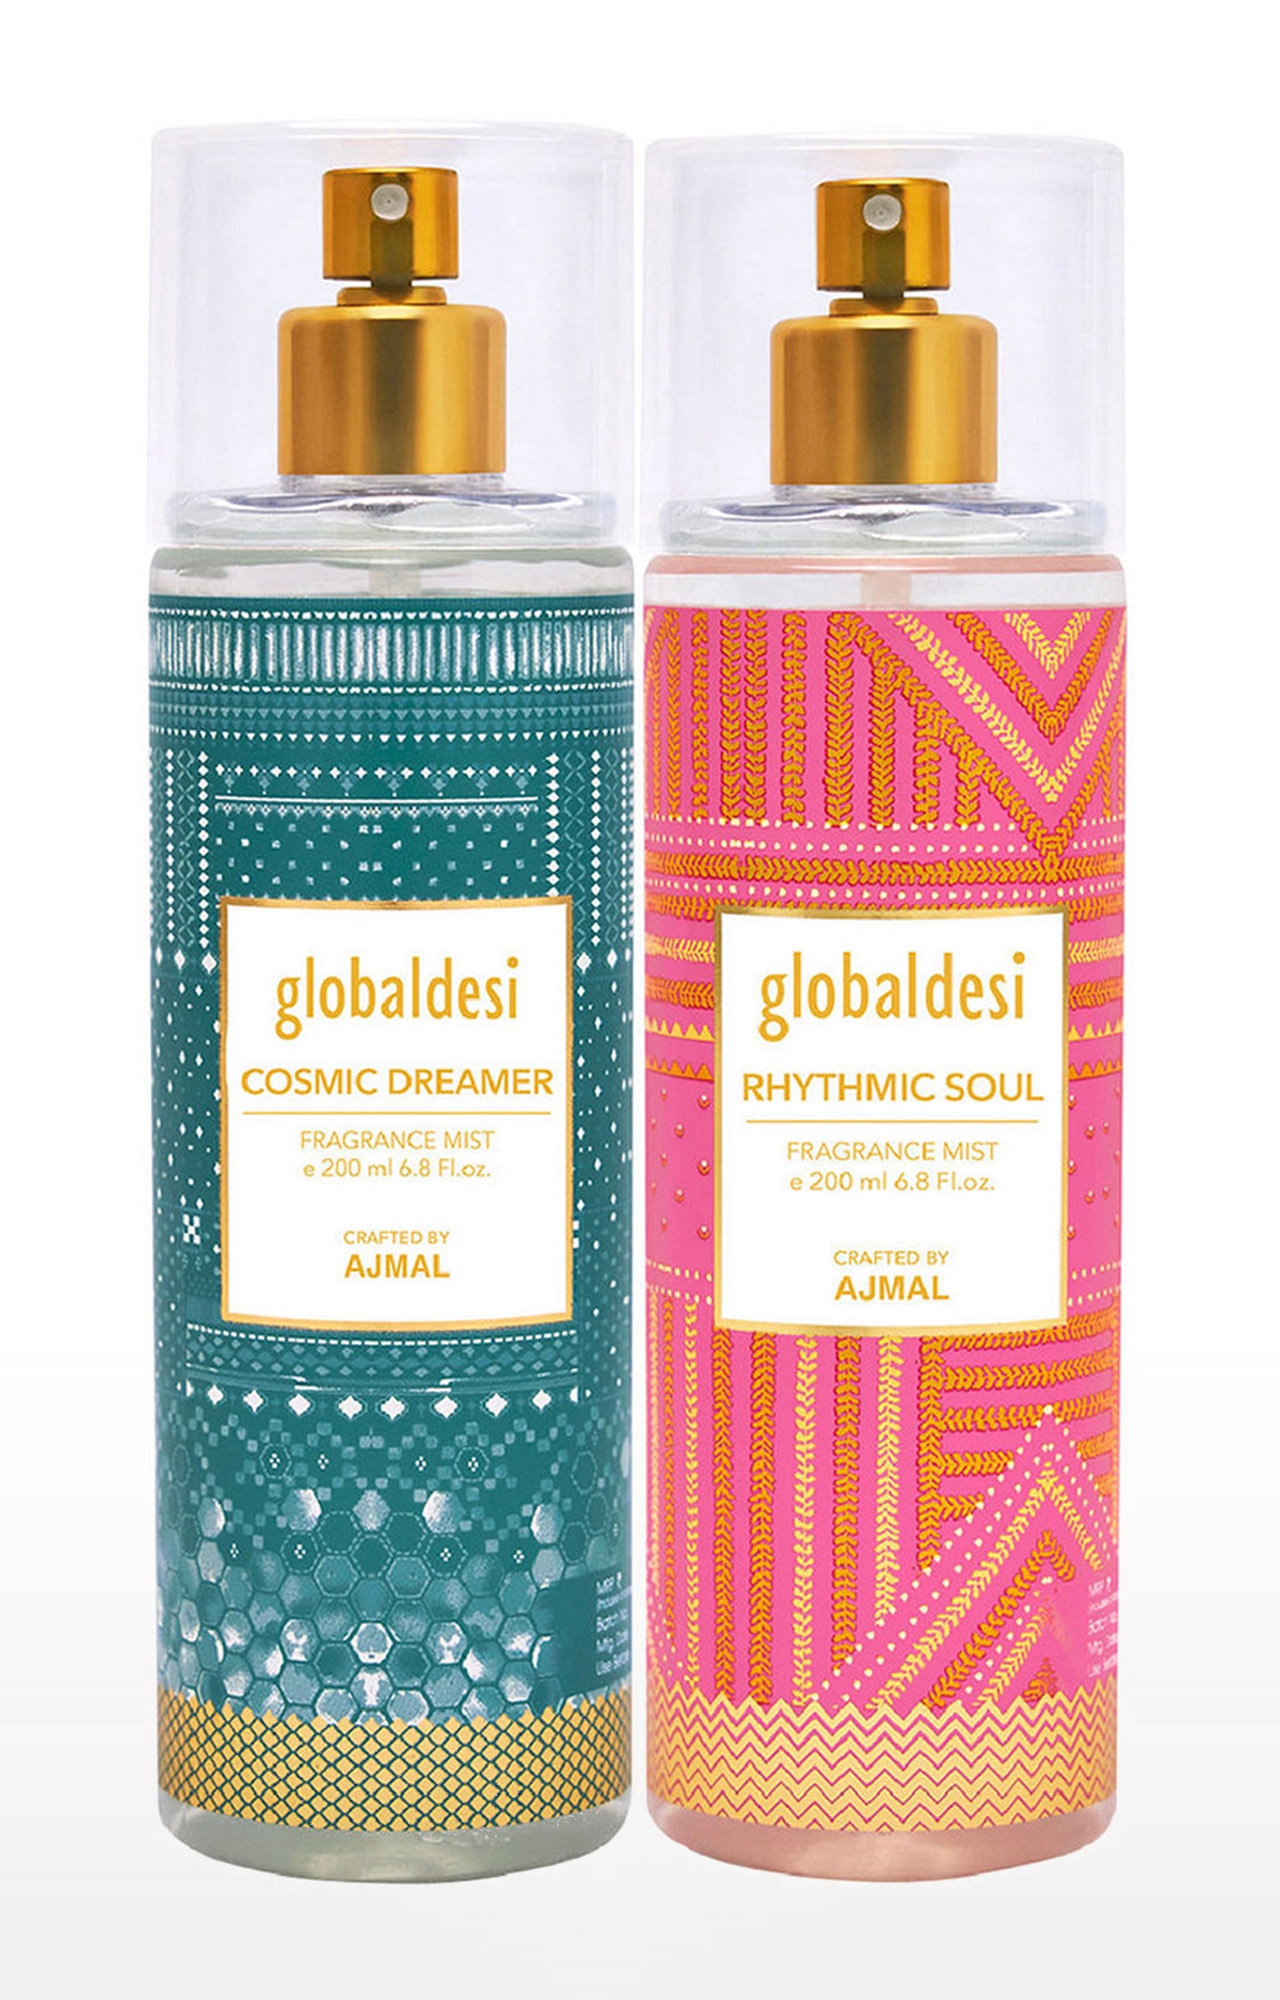 Global Desi Cosmic Dreamer & Rhythmic Soul Pack of 2 Body Mist 200ML each Long Lasting Scent Spray Gift For Women Perfume Crafted by Ajmal FREE